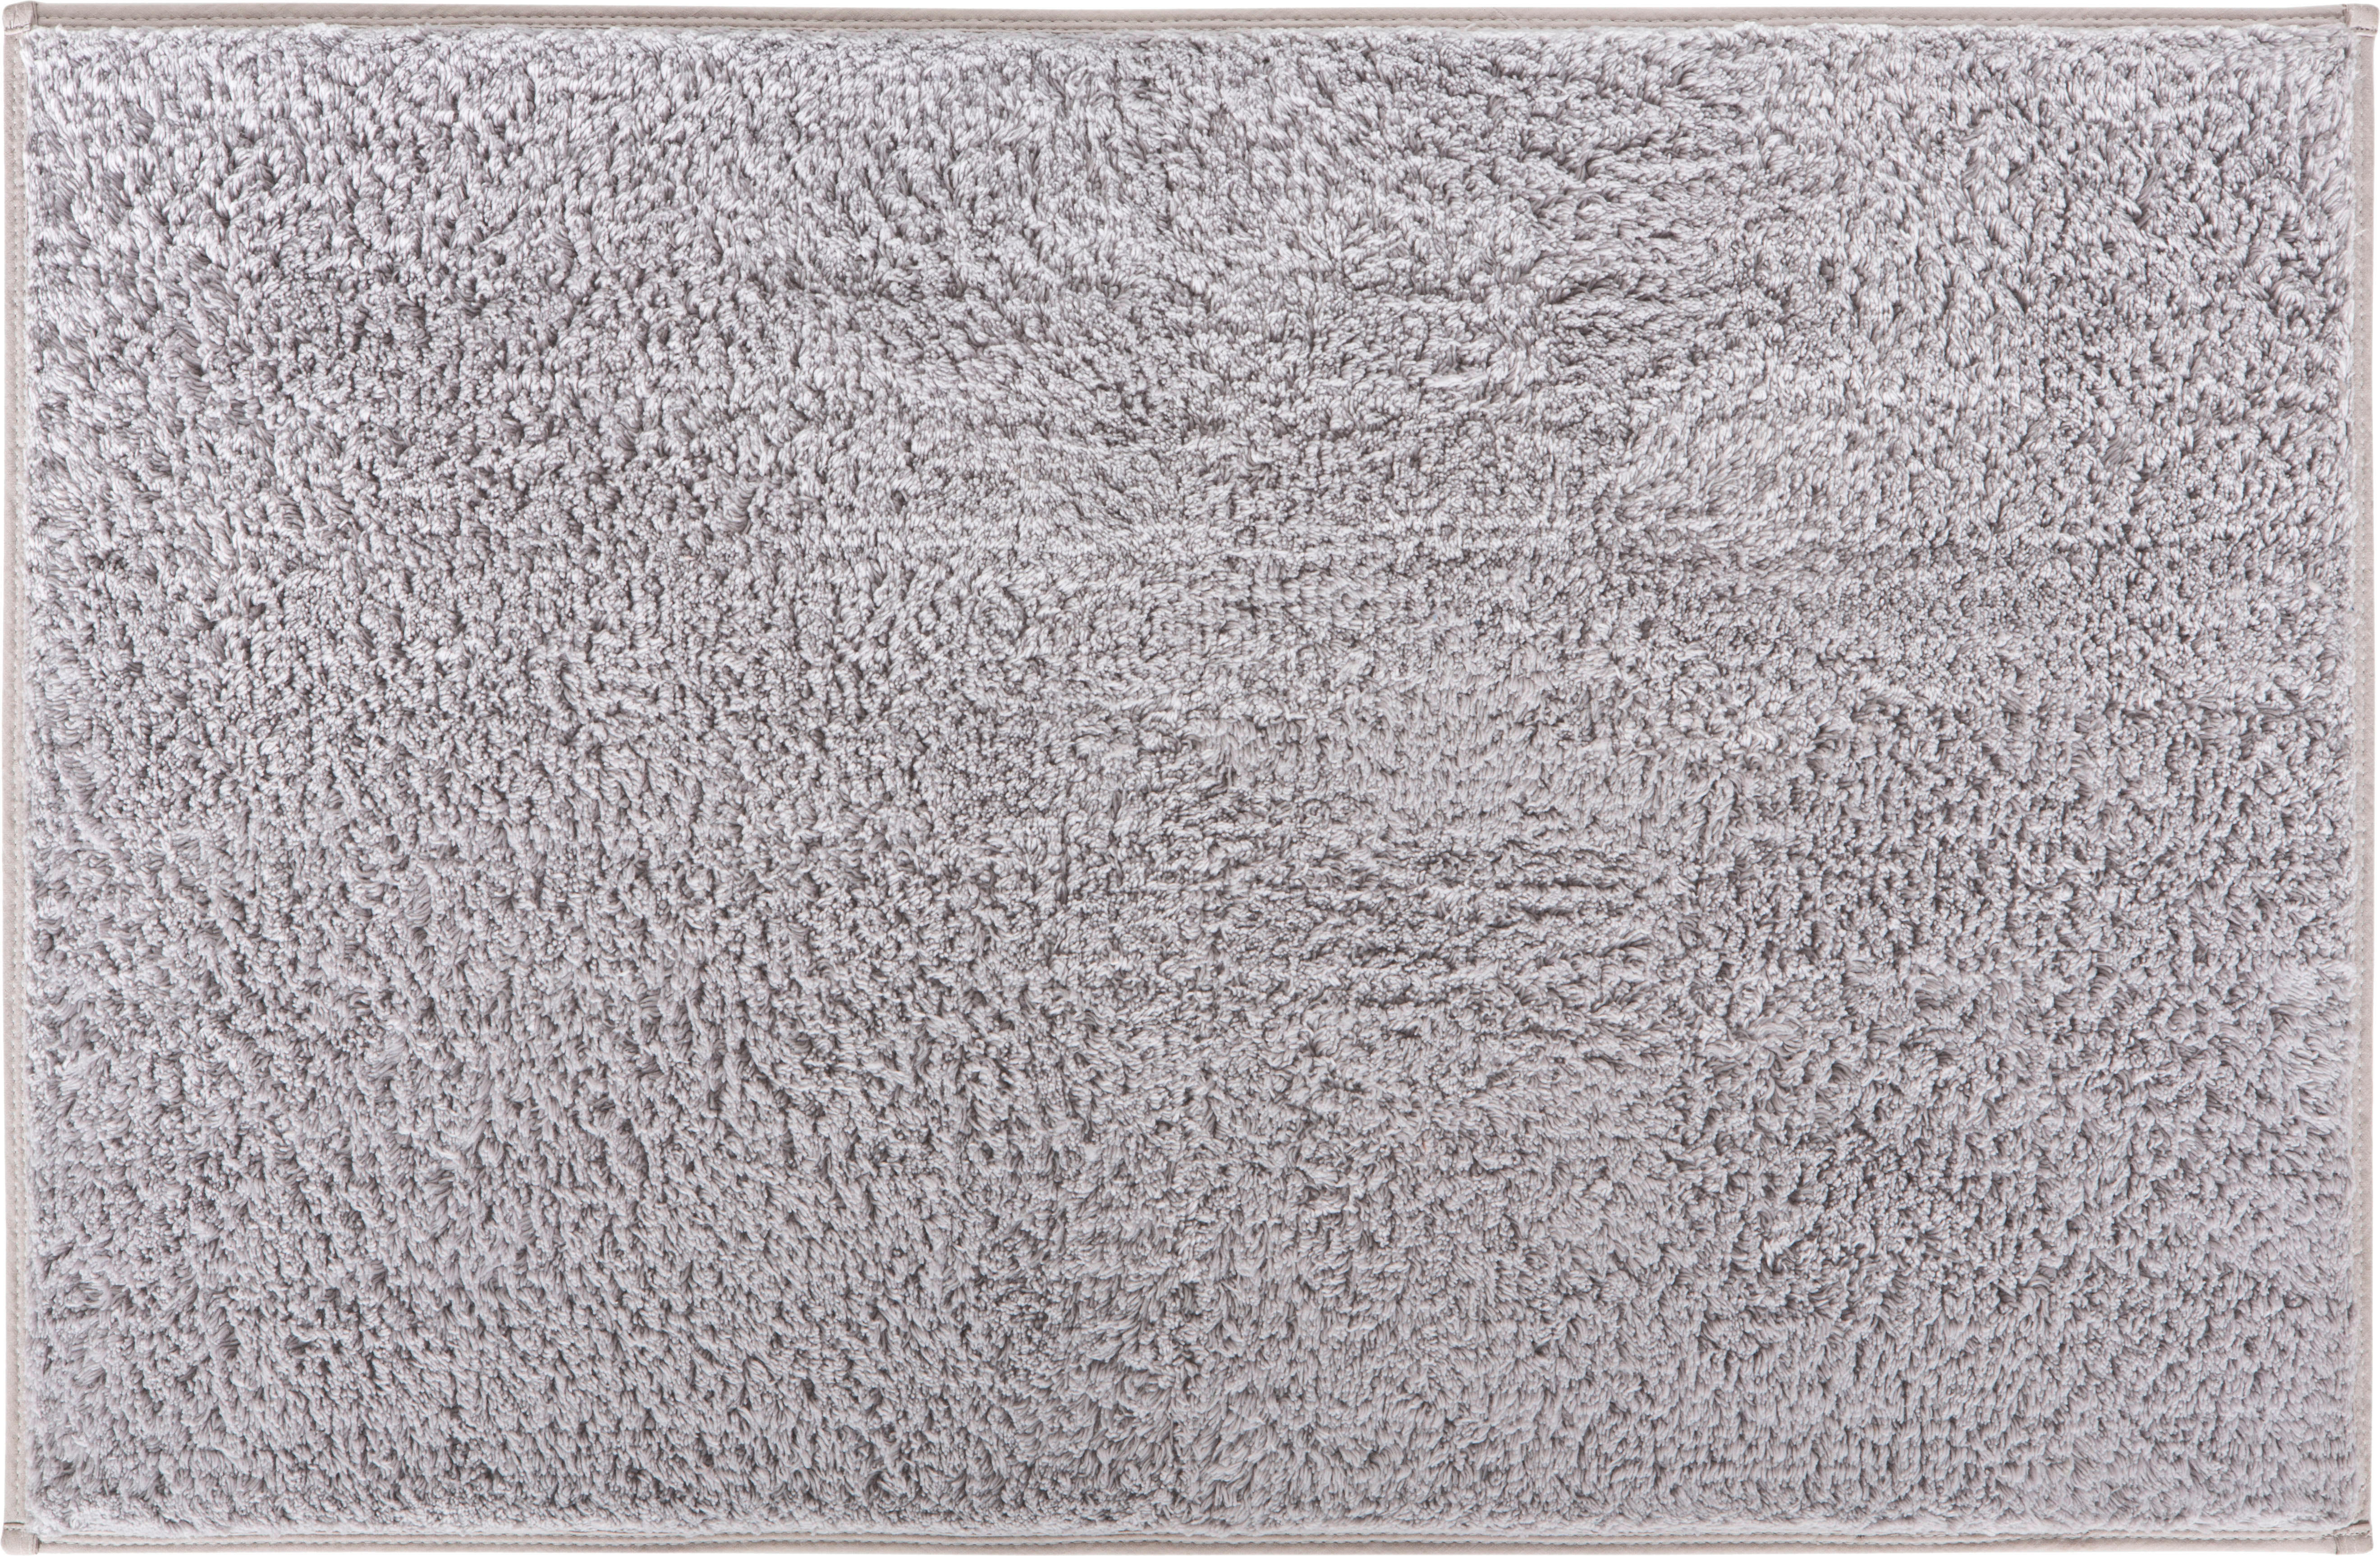 BADTEPPICH  Marla 70/120 cm  - Grau, Basics, Kunststoff/Textil (70/120cm) - Grund